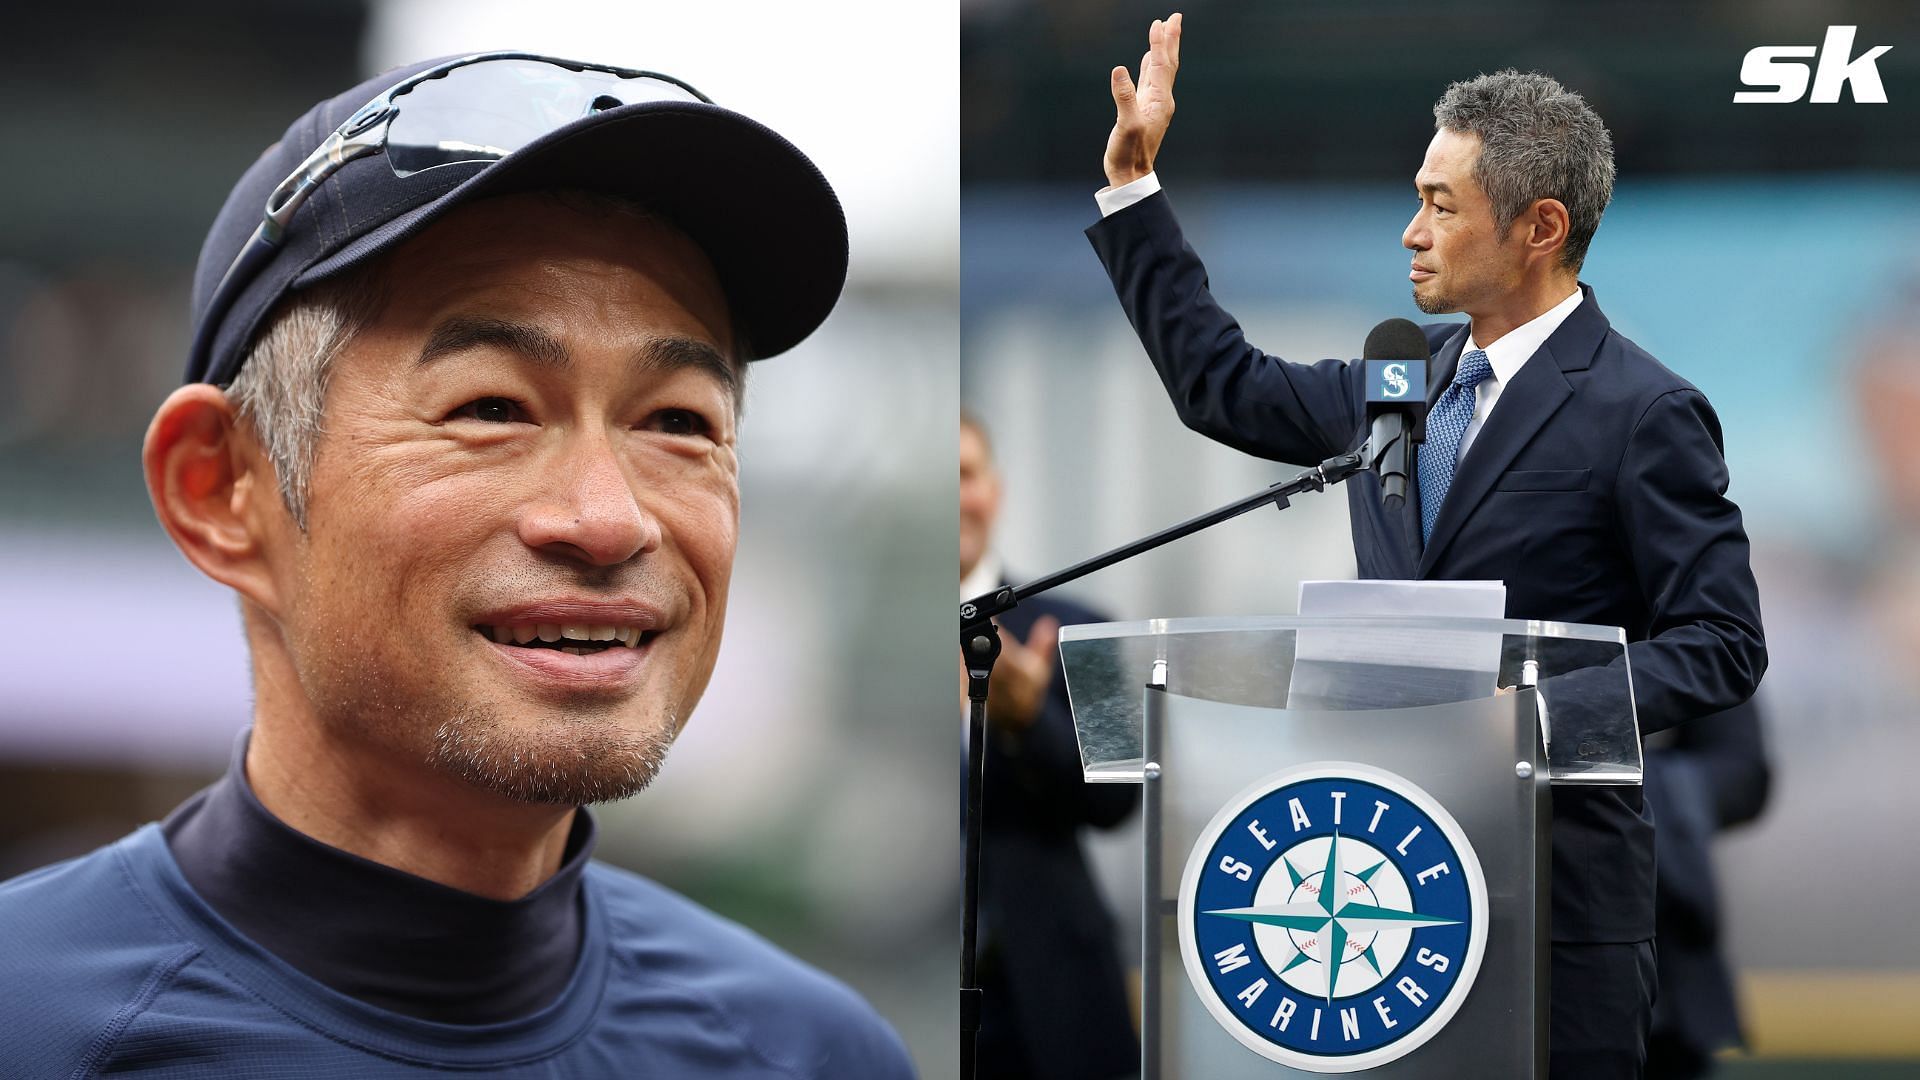 MLB fans react to Ichiro Suzuki&rsquo;s complete-game shutout against a high school girls team. 